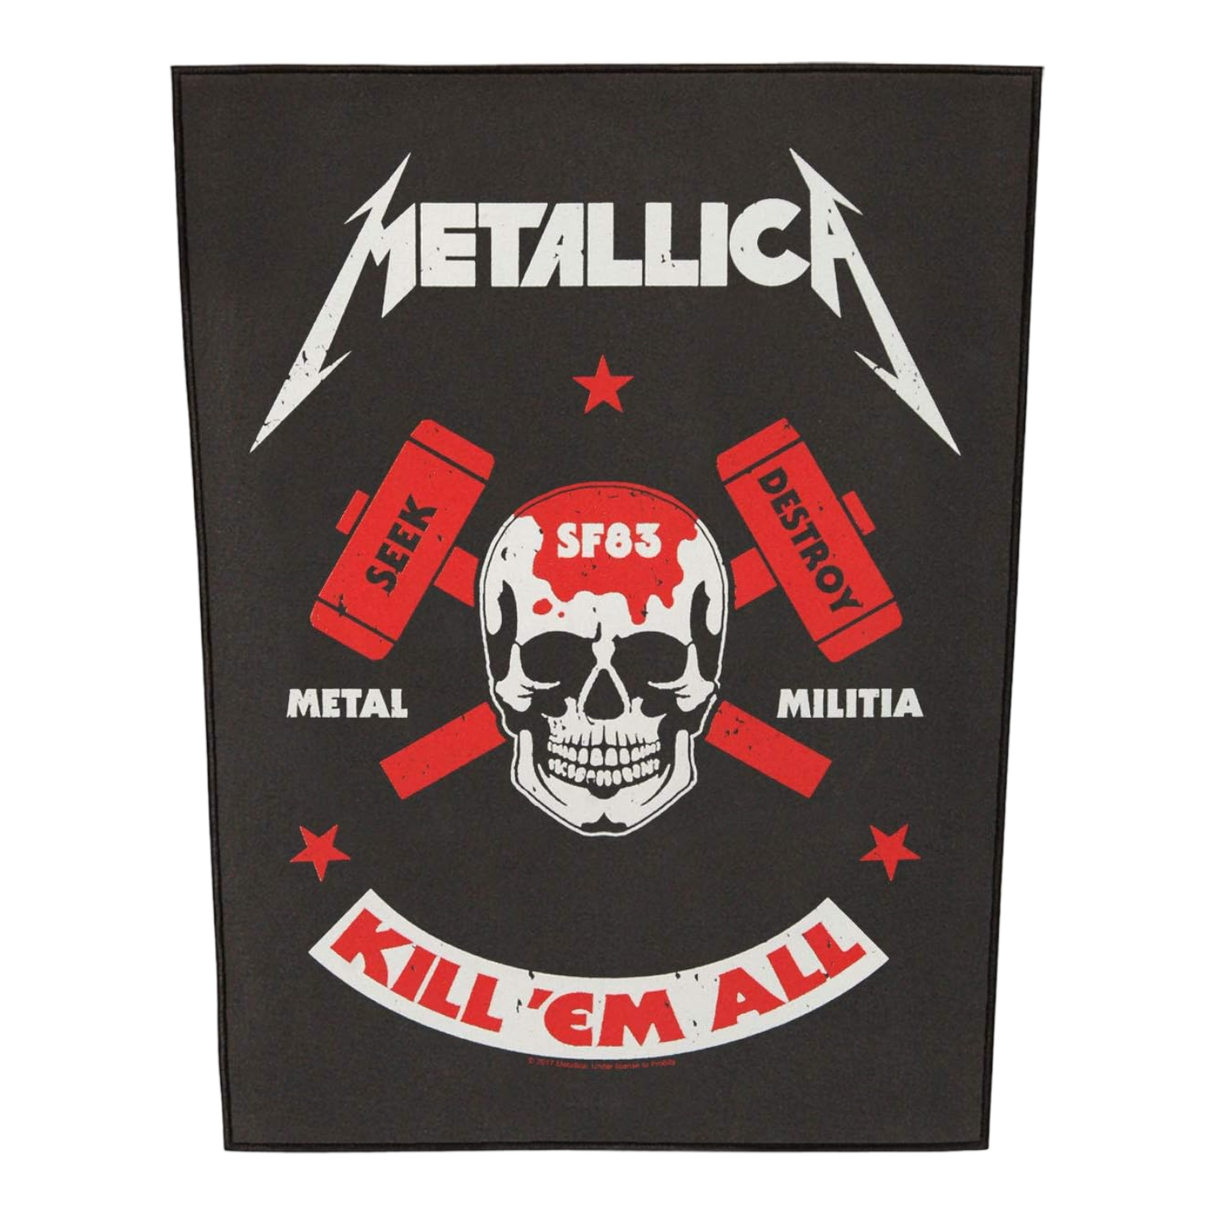 Metallica bib - Metal Militia